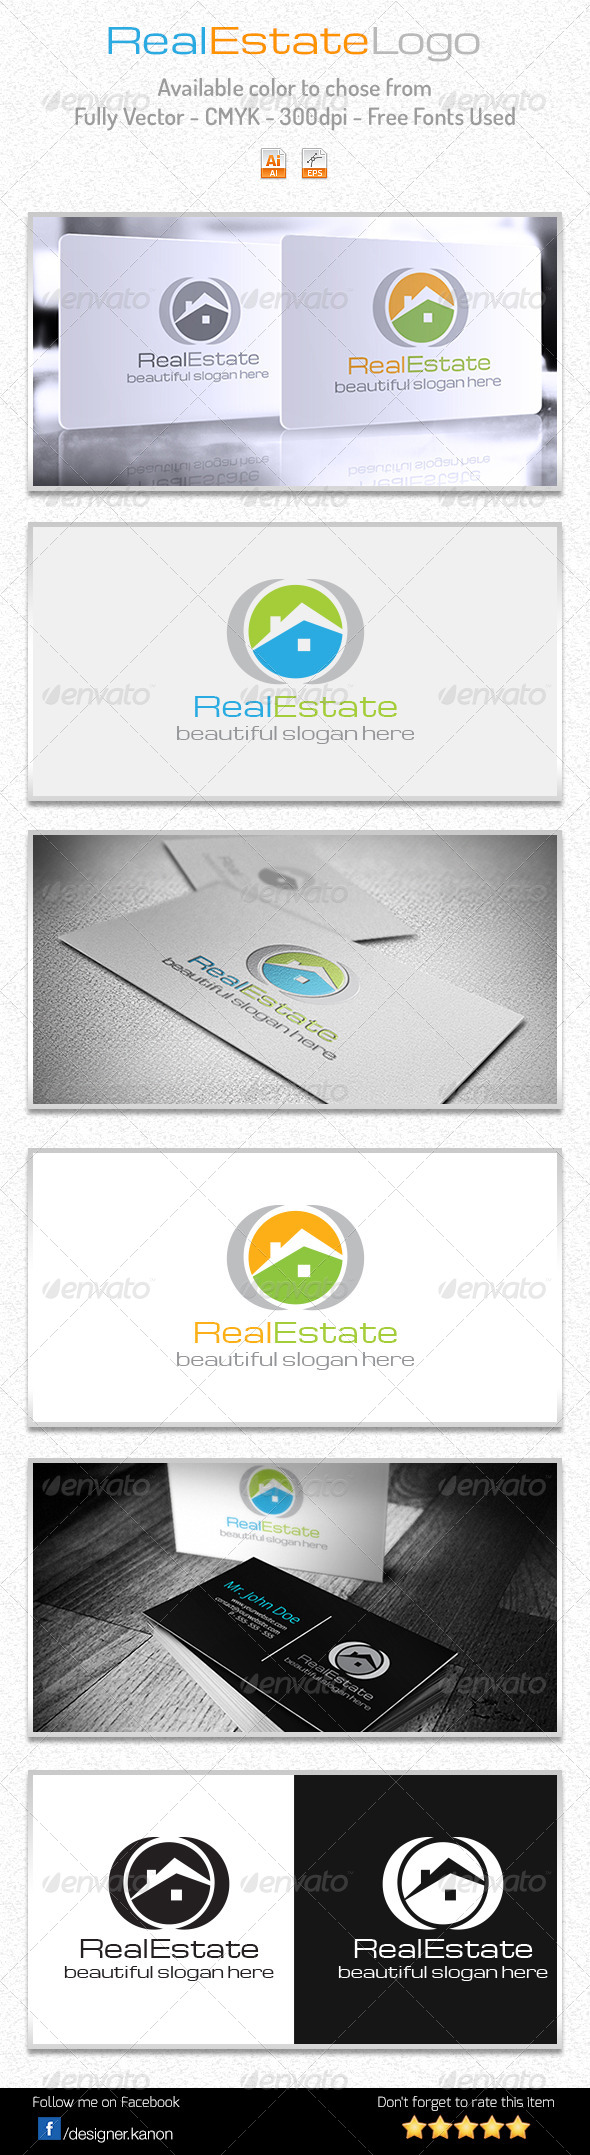 Simple Real Estate Logo